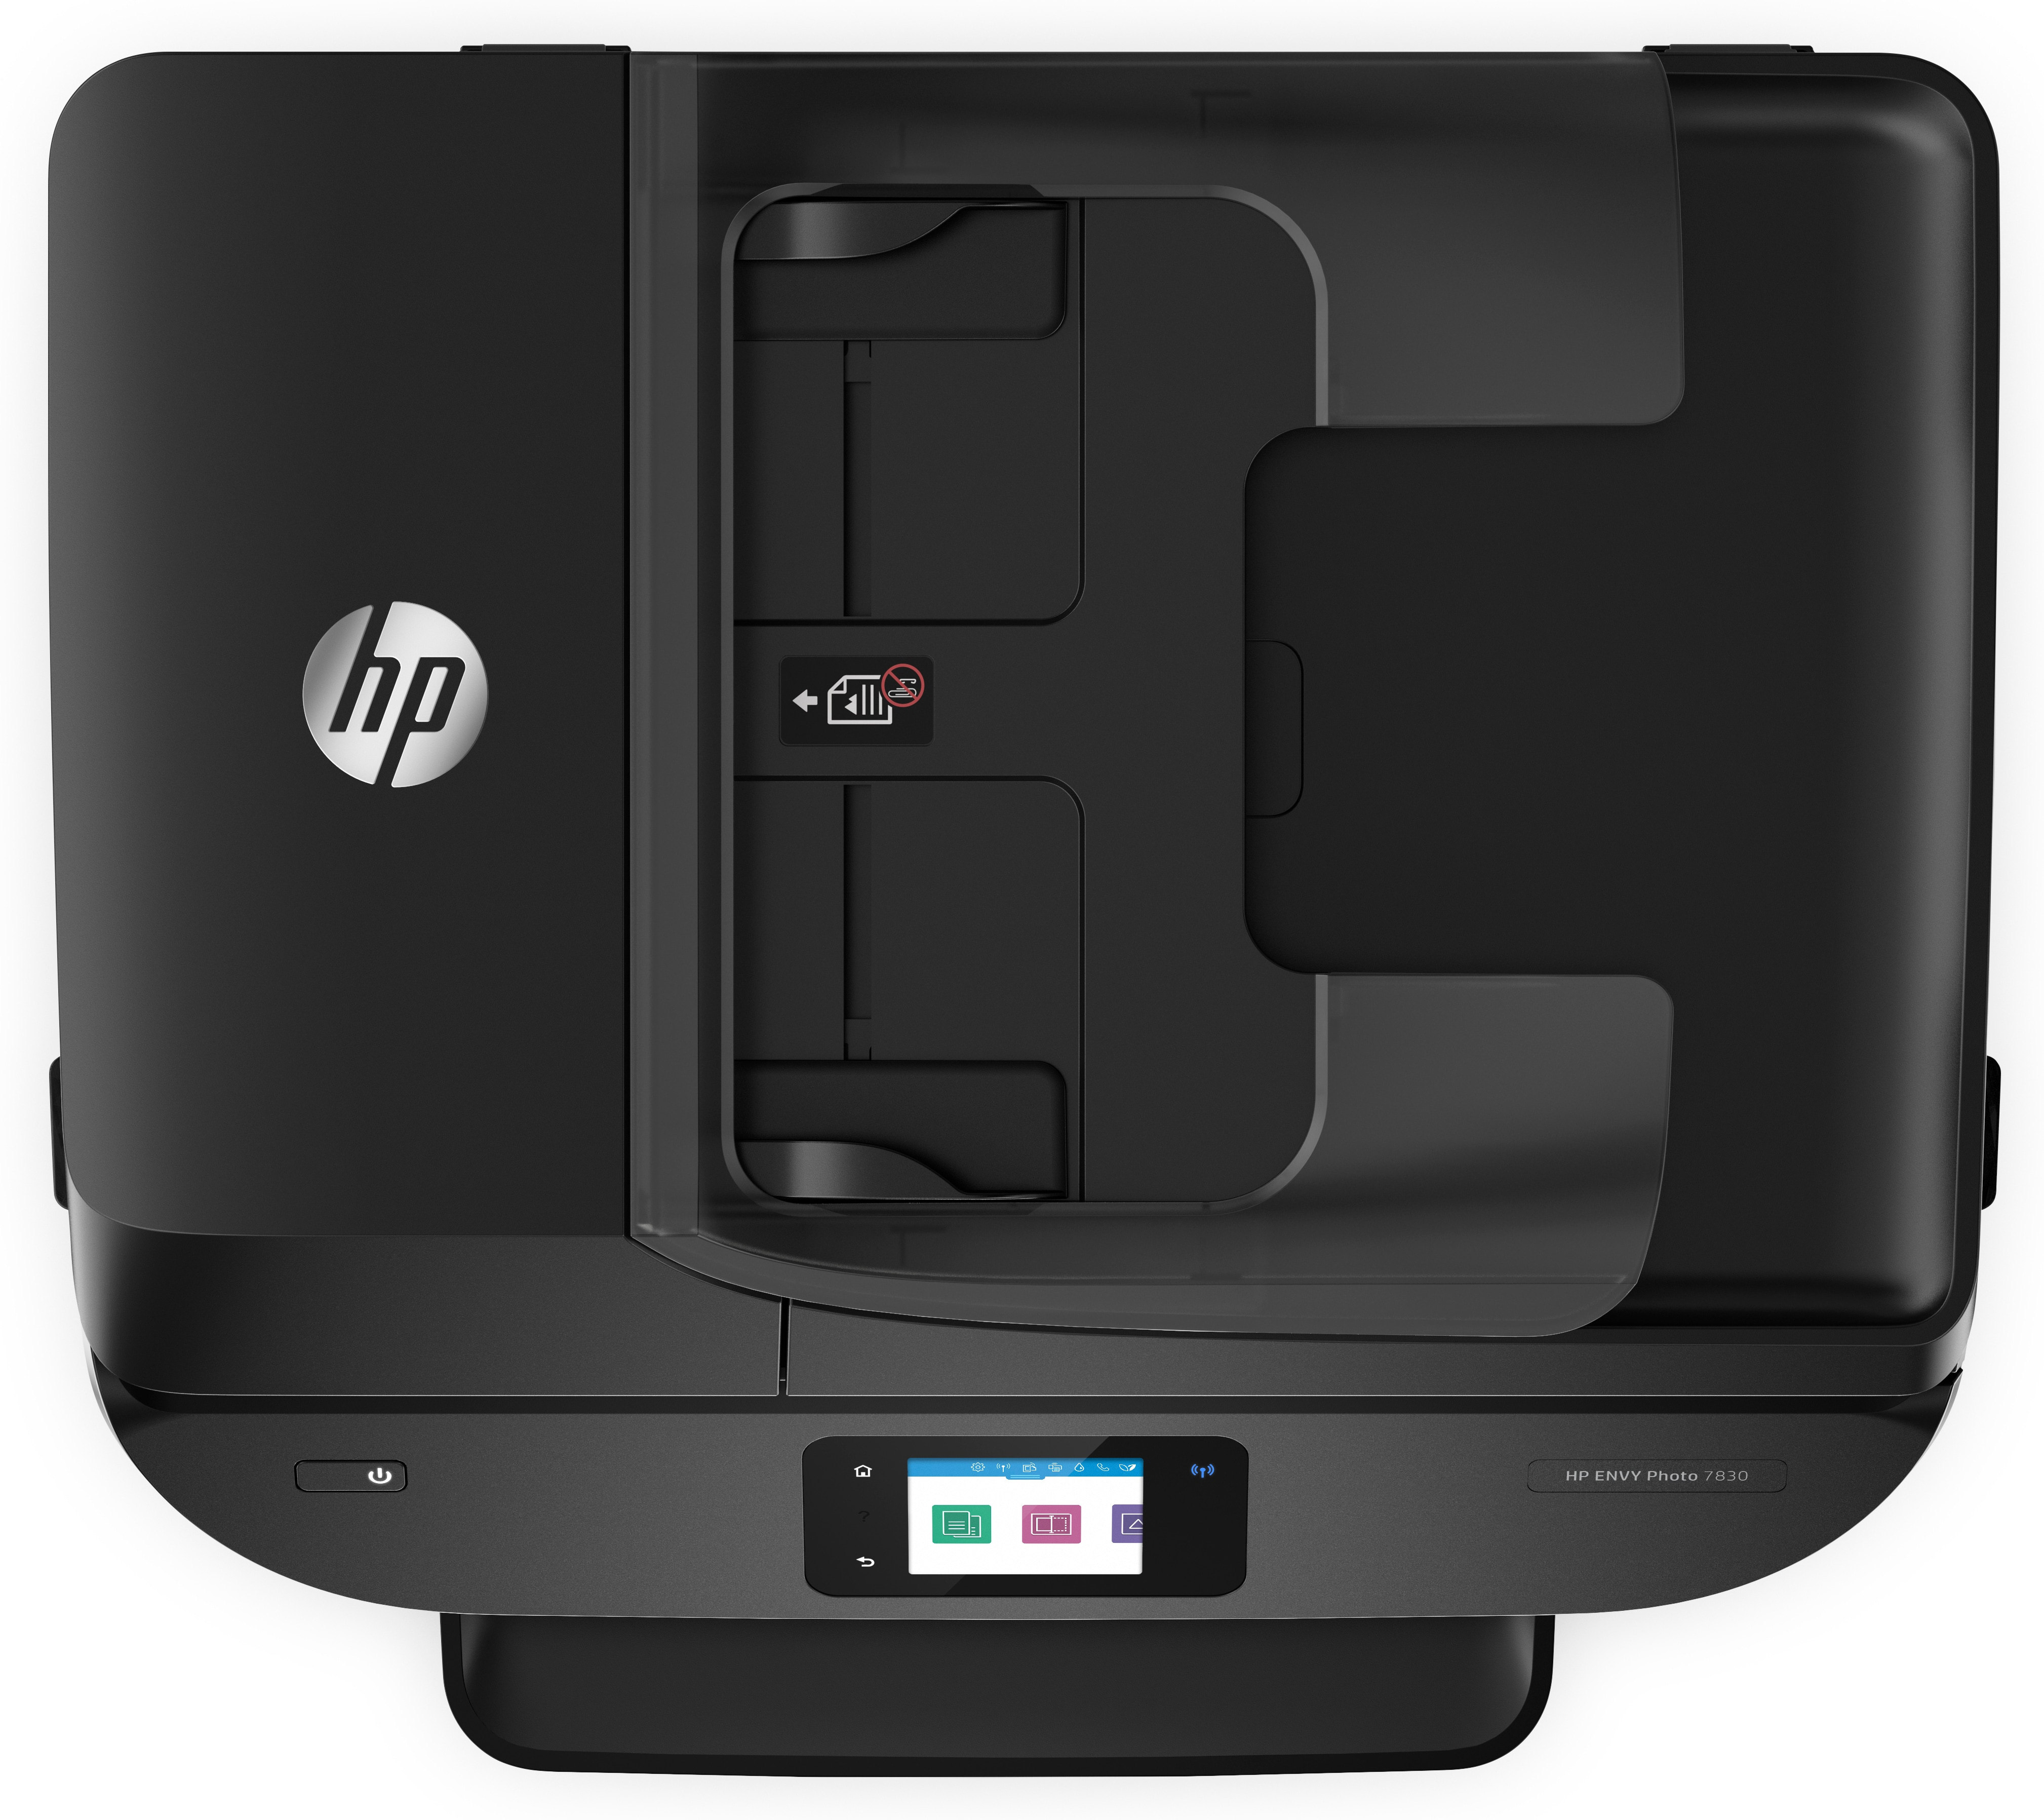 ENVY HP Thermal (Instant 7830 Inkjet Ink) WLAN Photo 4-in-1 Multifunktionsdrucker Netzwerkfähig